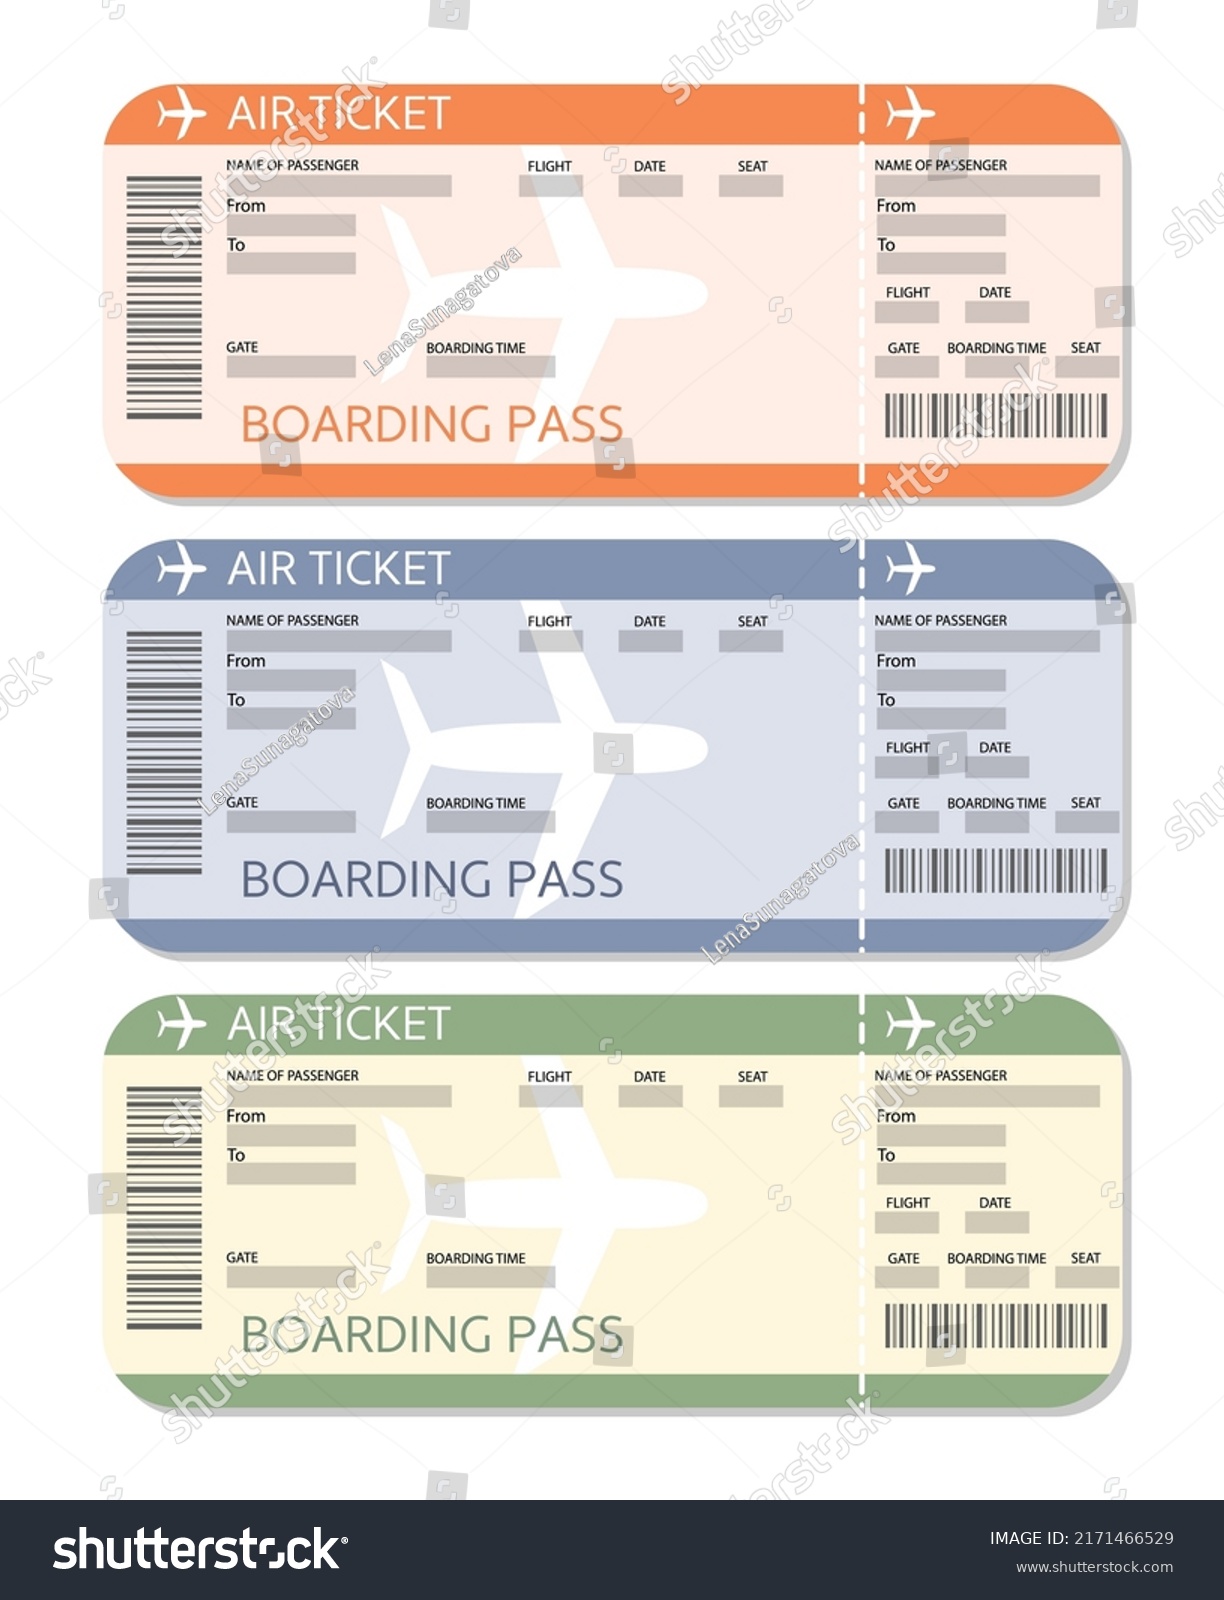 Посадочный талон шаблон для фотошопа. Airline tickets PNG. Paspor with Travel ticket. Ticket user